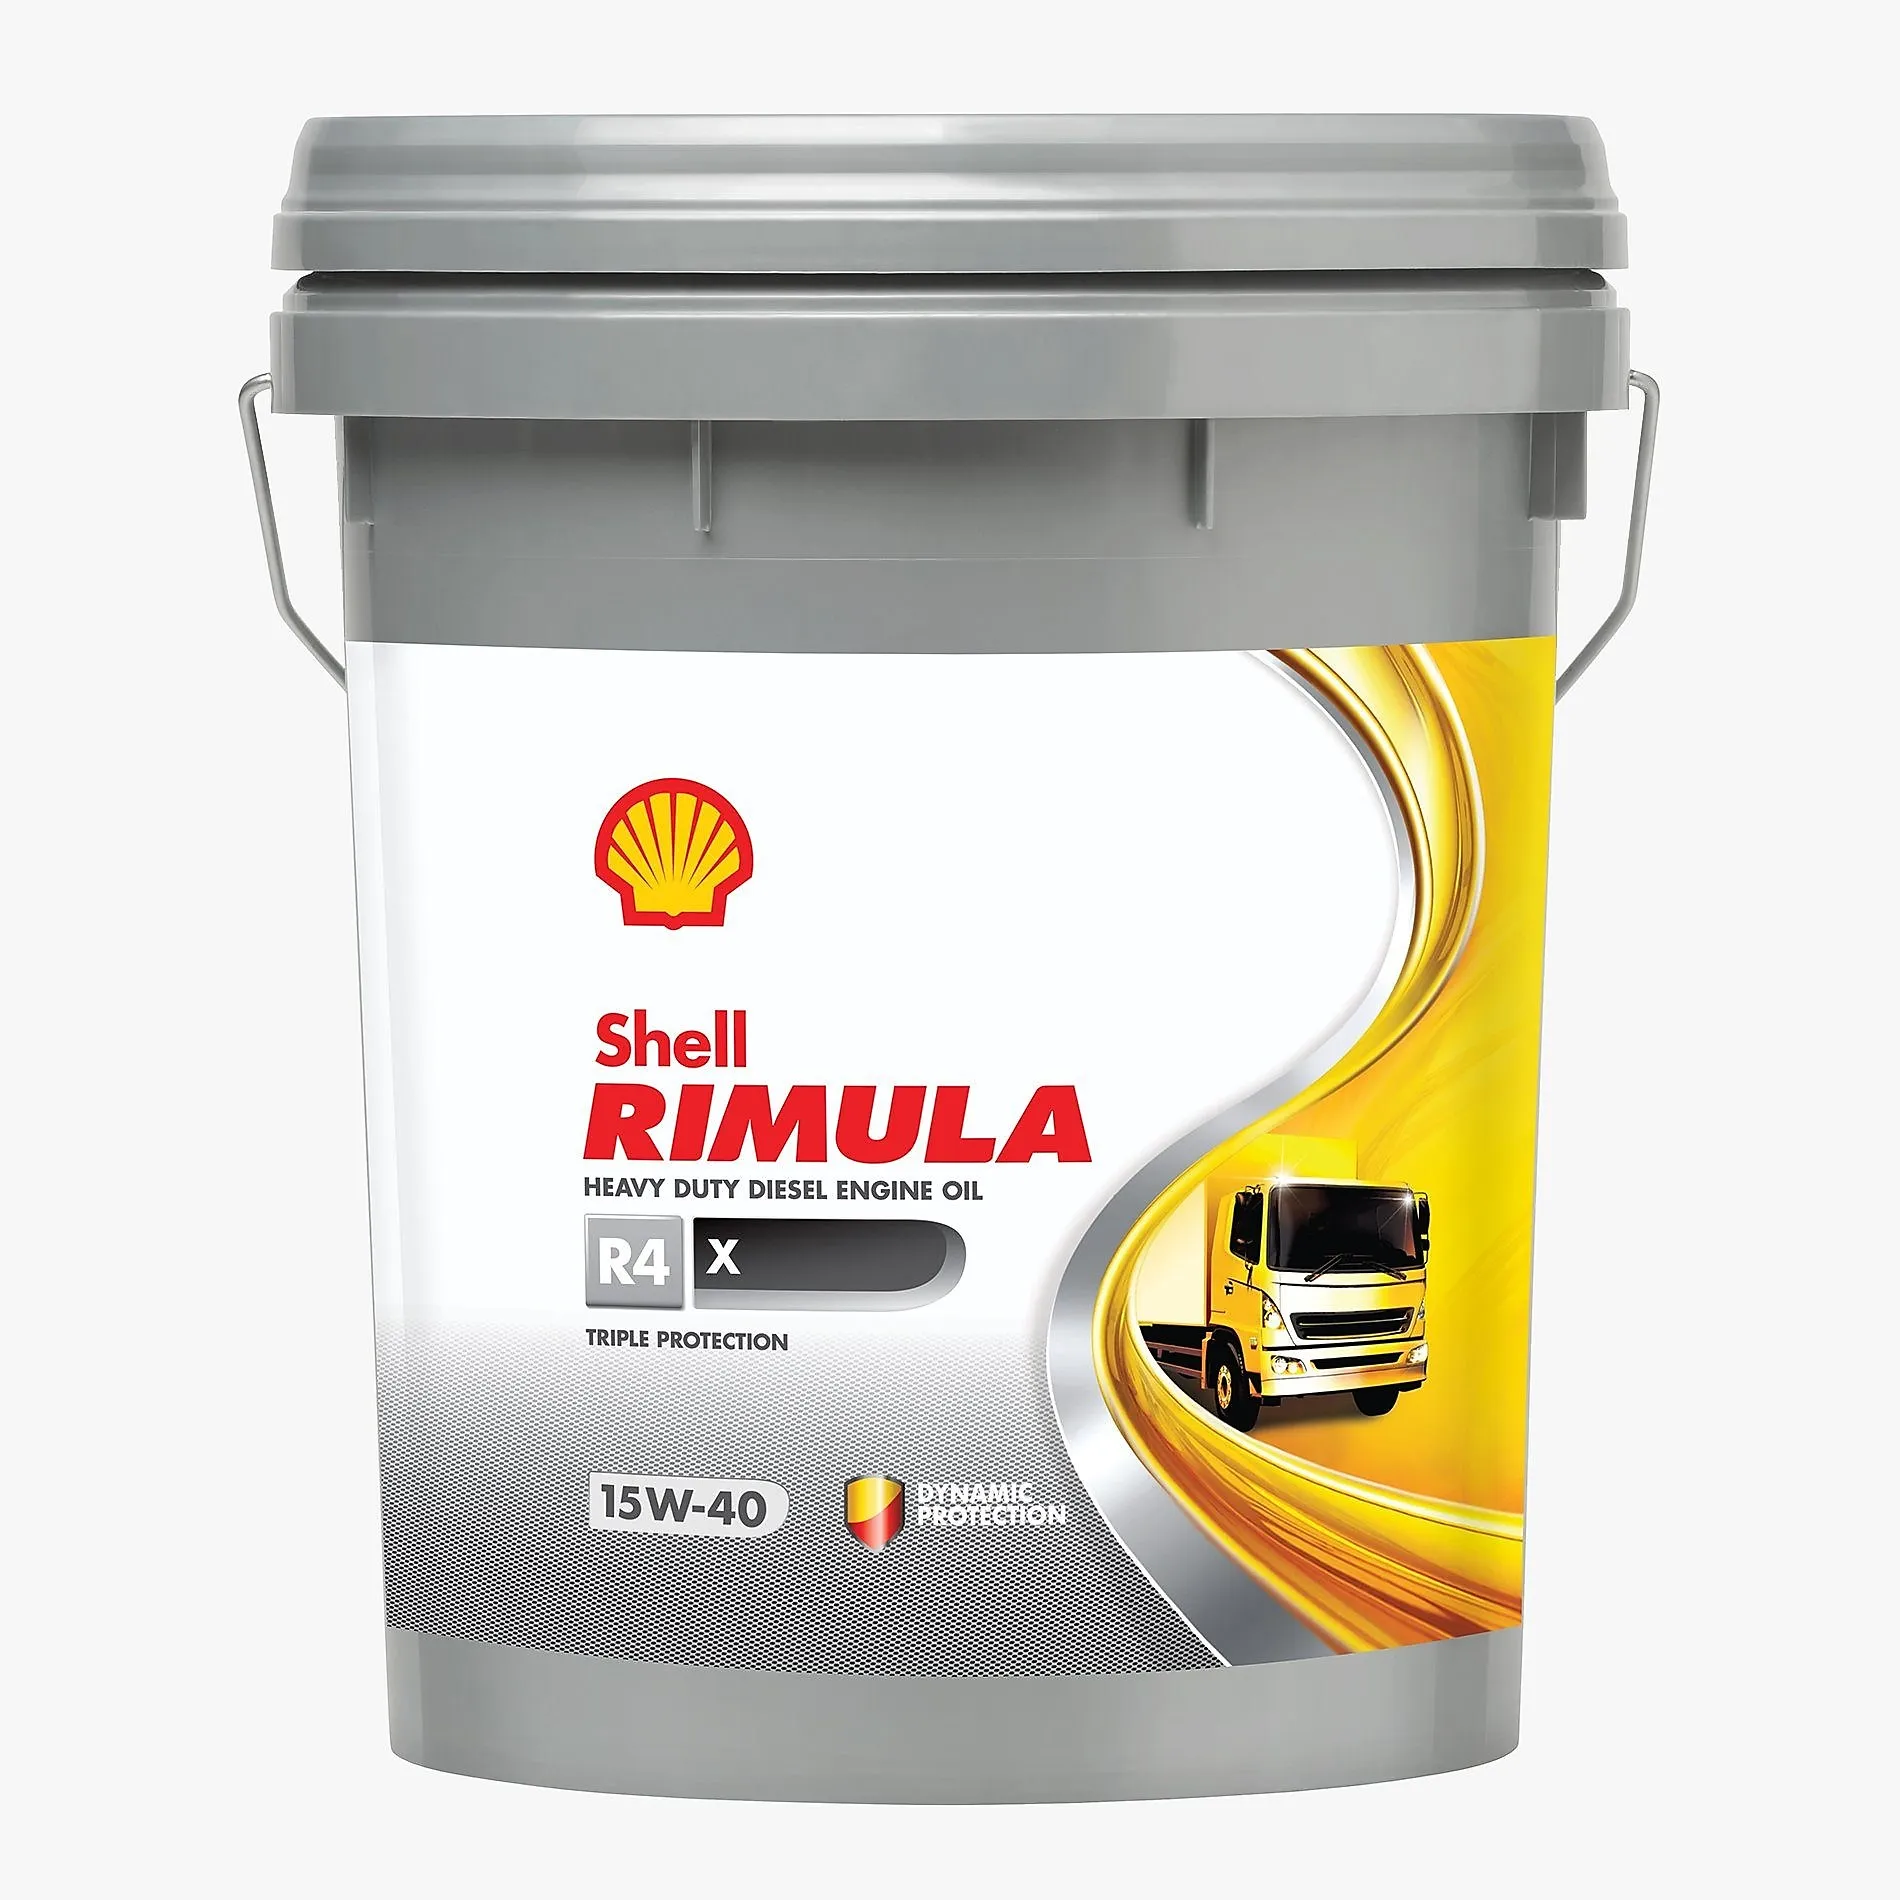 Shell Rimula R4X 15w40#8